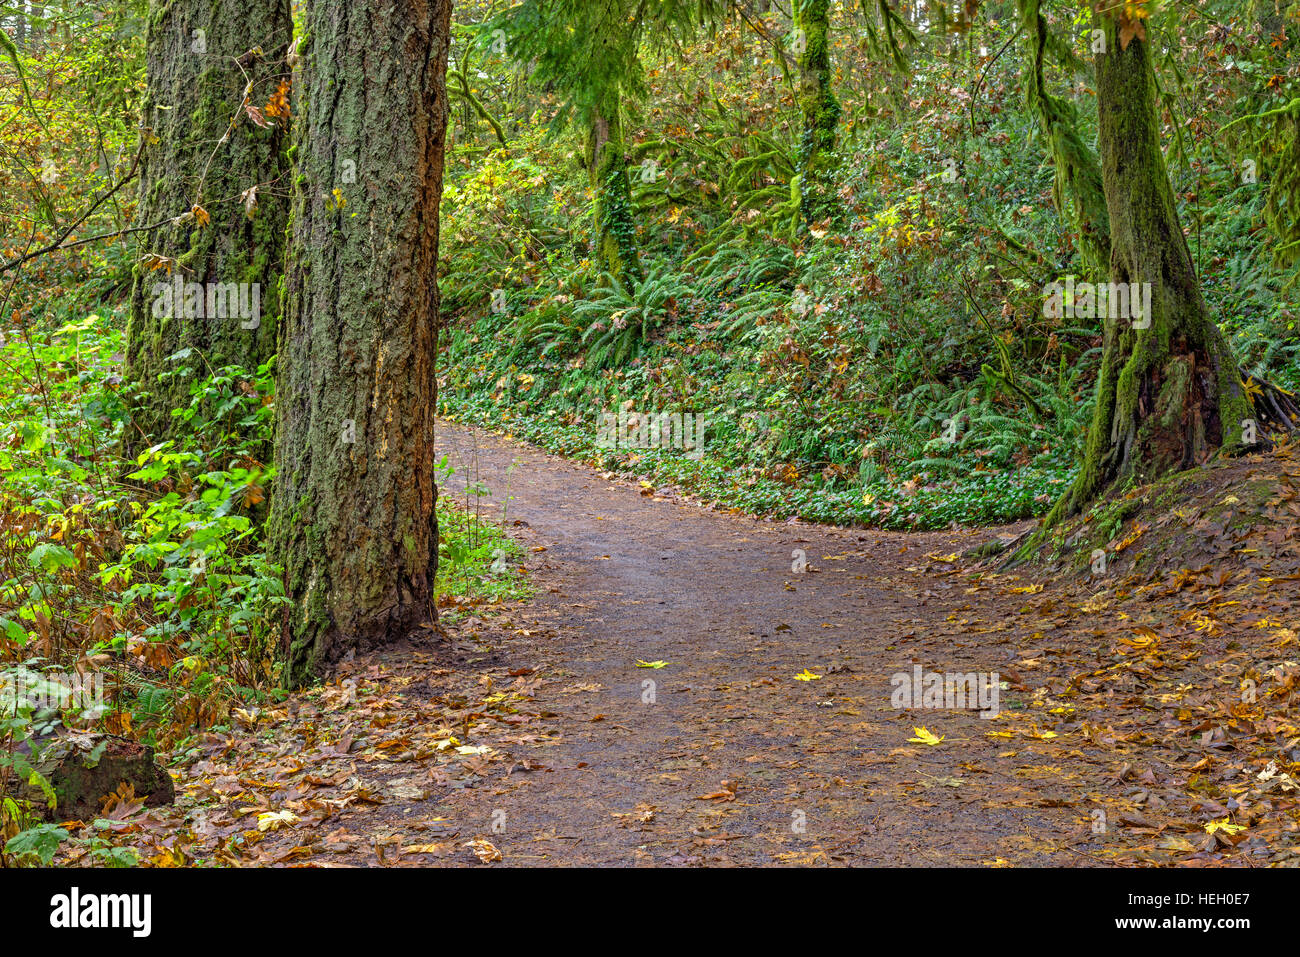 USA, Washington, Camas, Lacamas Park, Trail through autumn forest with Douglas fir, bigleaf maple and ferns. Stock Photo